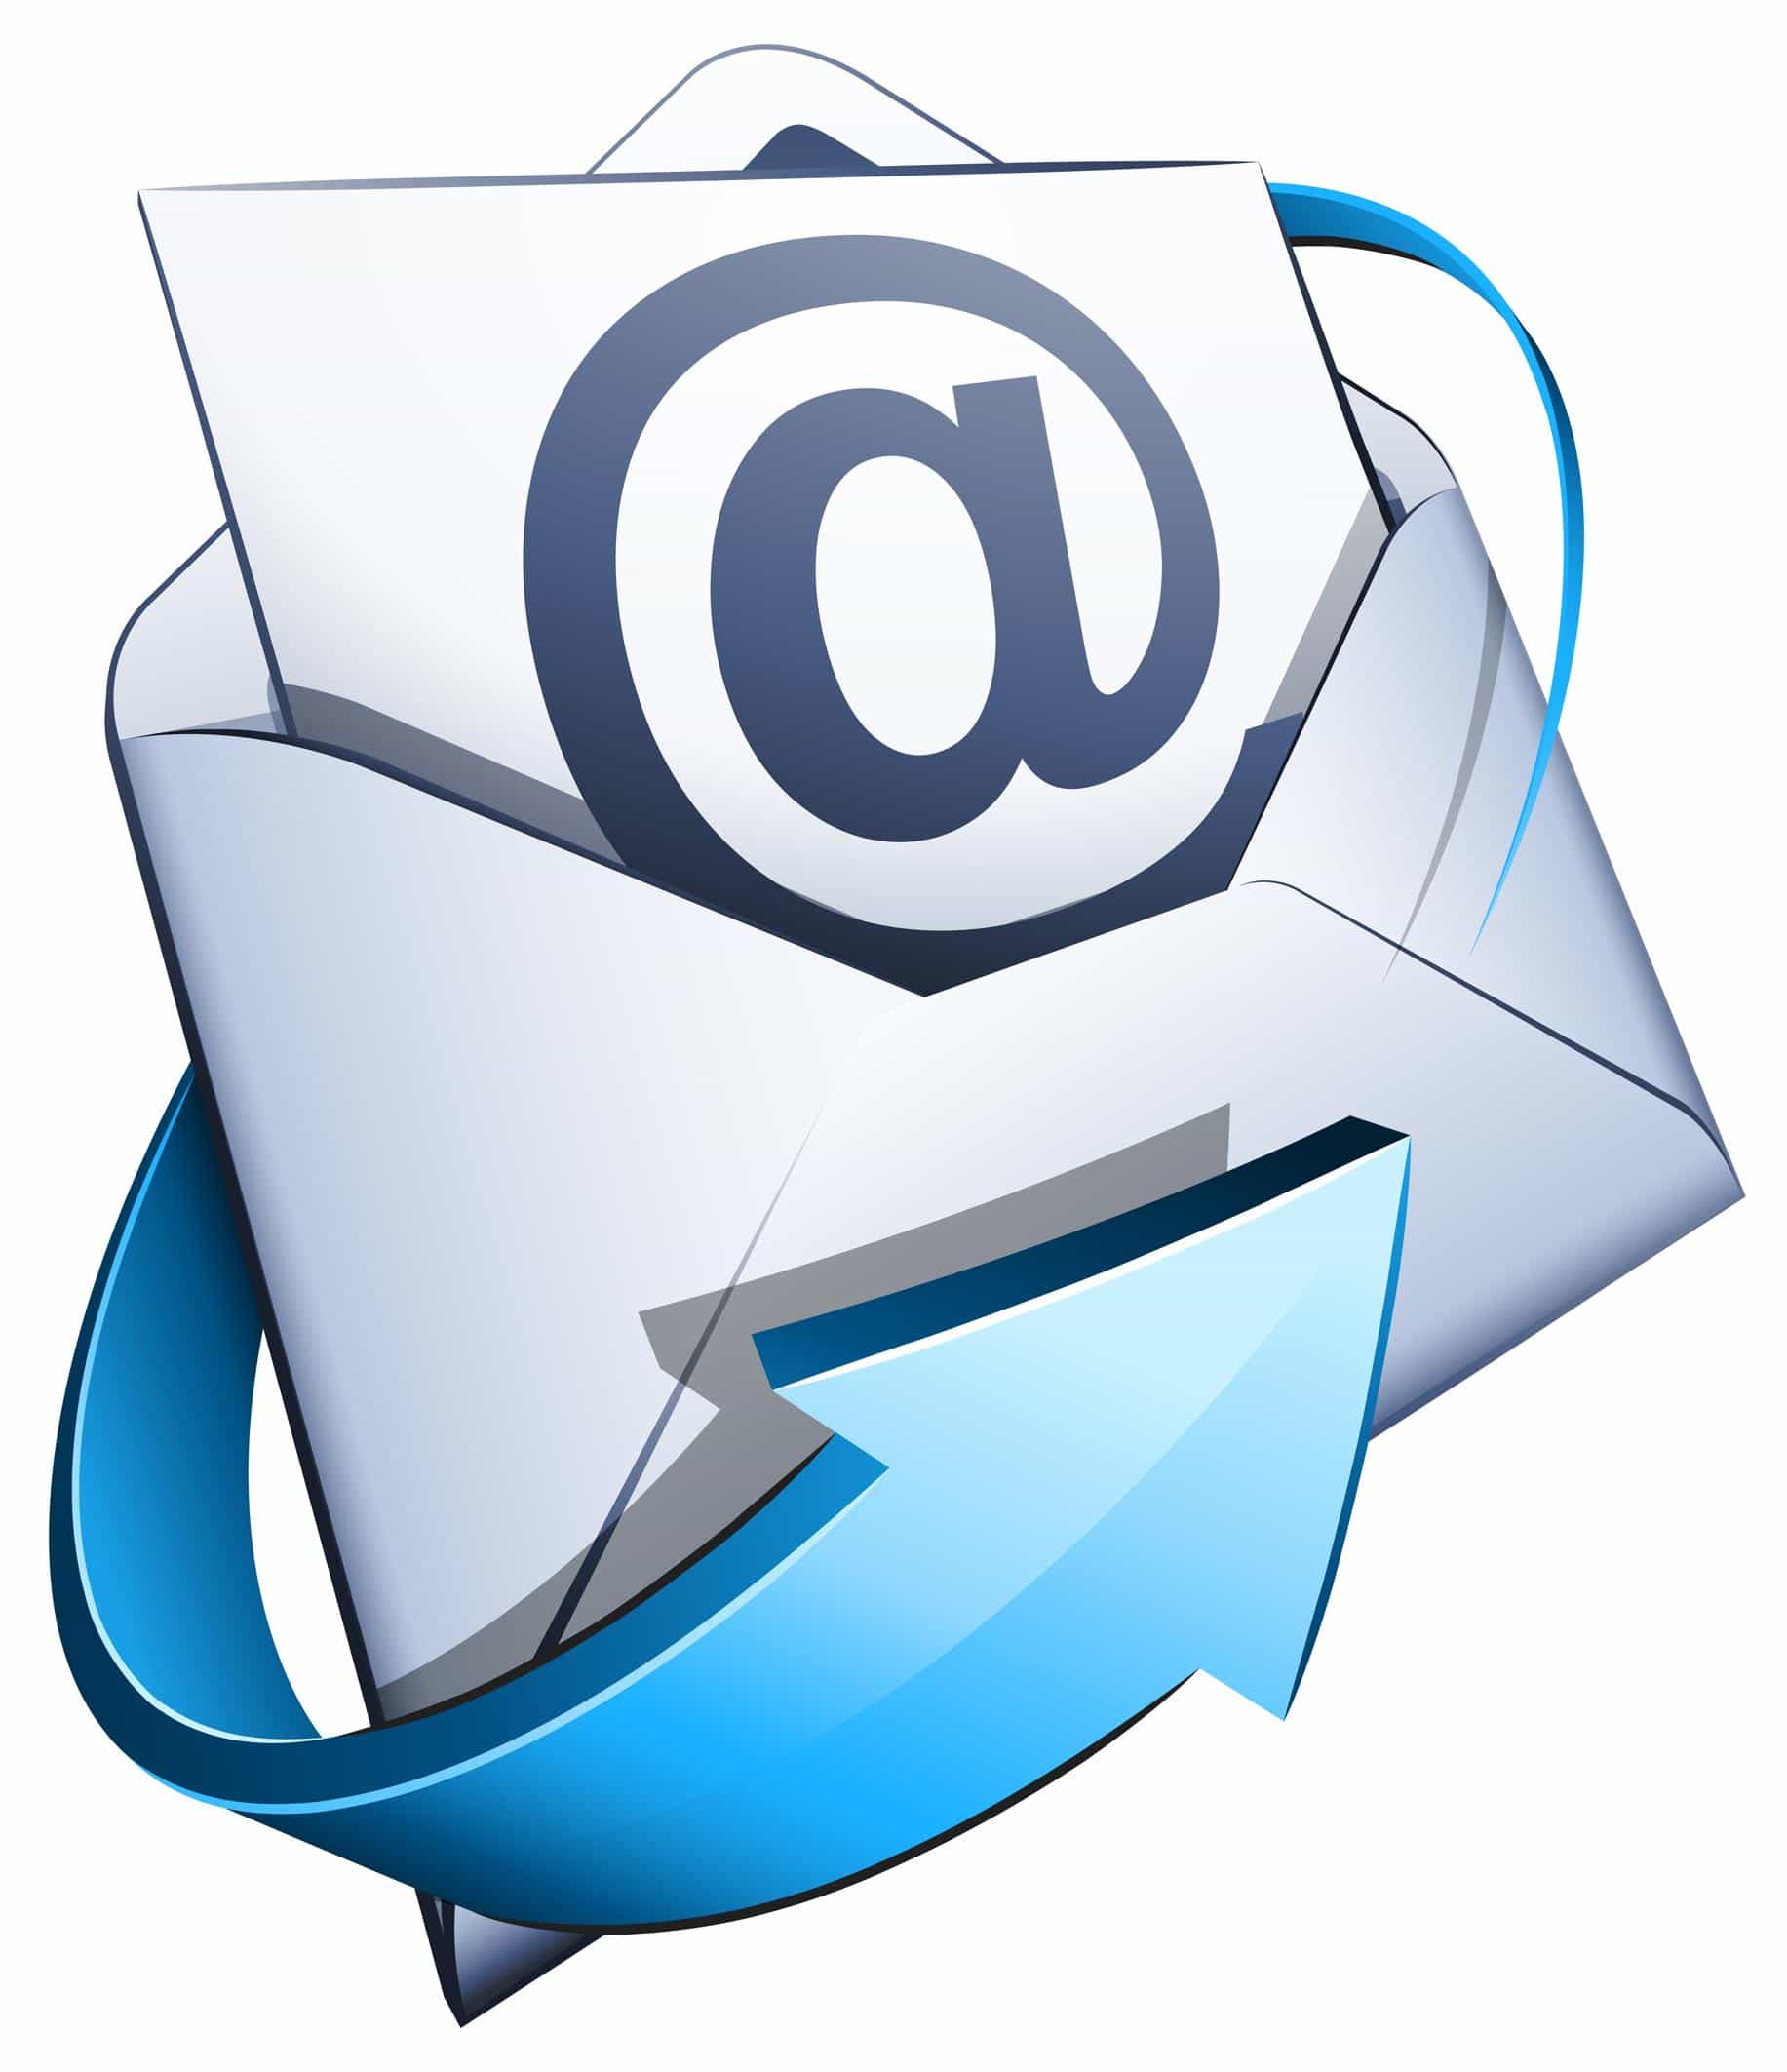 Picture mail. Пиктограмма электронная почта. Значок e-mail. Логотип электронной почты. Elektroni pochta.